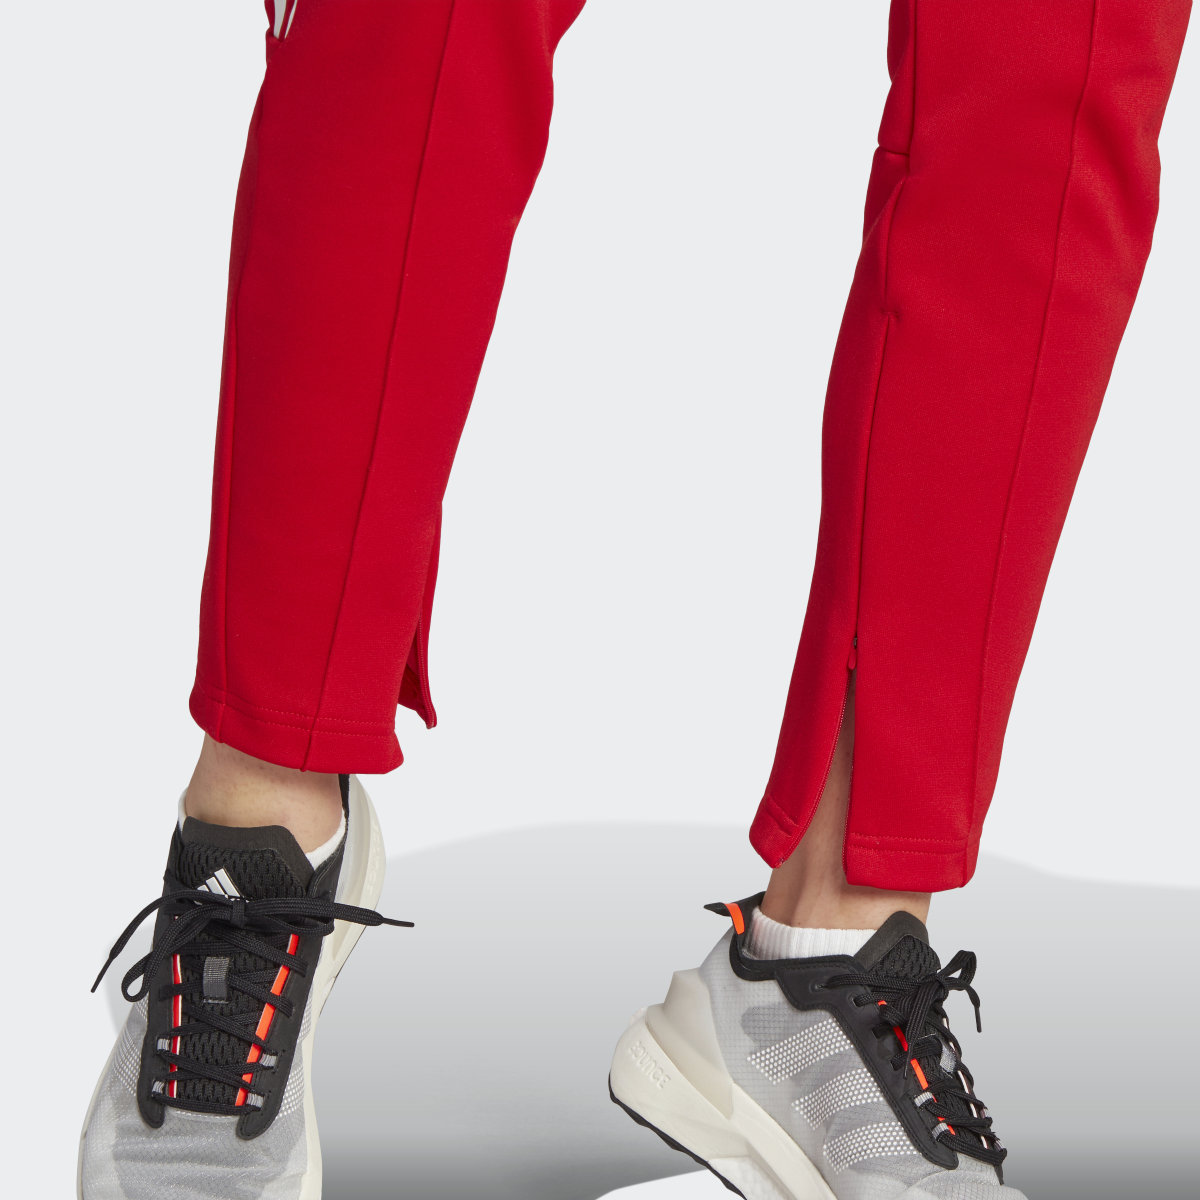 Adidas Pants Deportivo Tiro Suit Up Lifestyle. 7